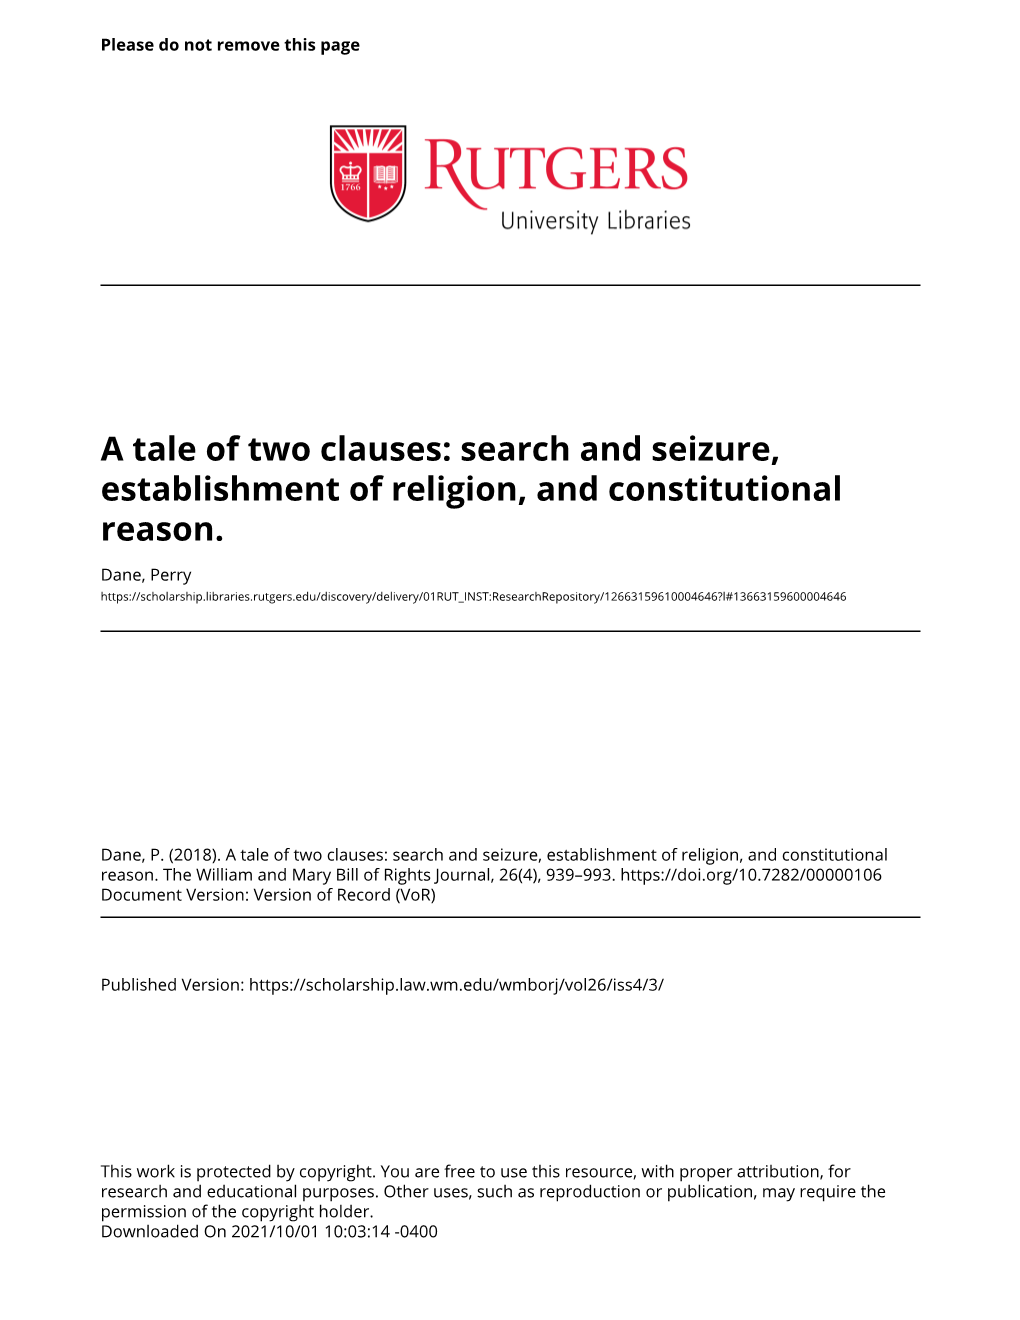 Search and Seizure, Establishment of Religion, and Constitutional Reason